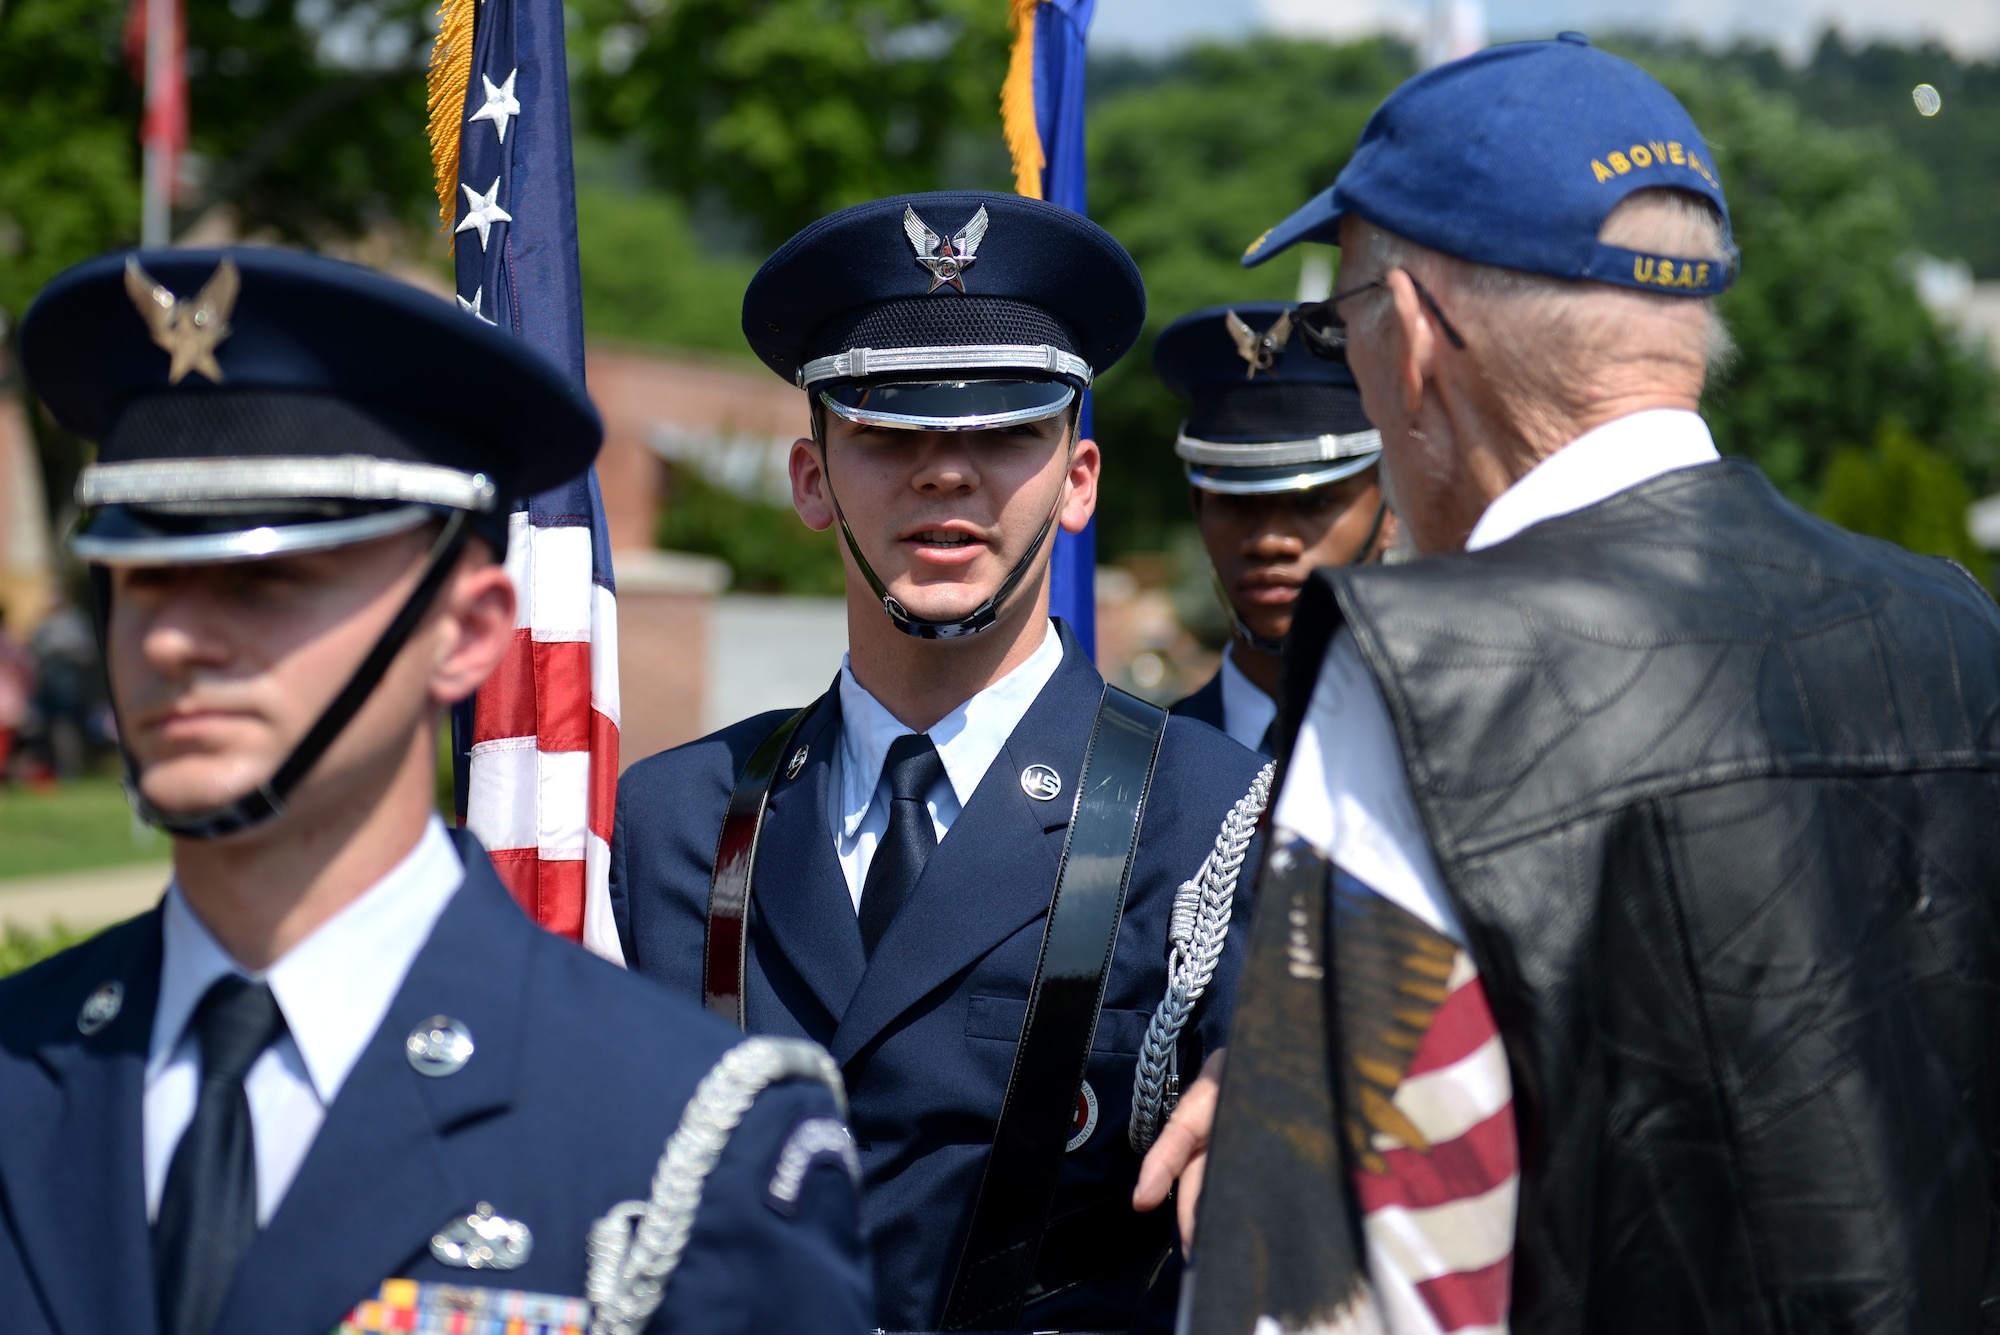 A man in the Air Force honor guard service dress uniform speaks with an elderly gentleman wearing an Air Force ball cap.